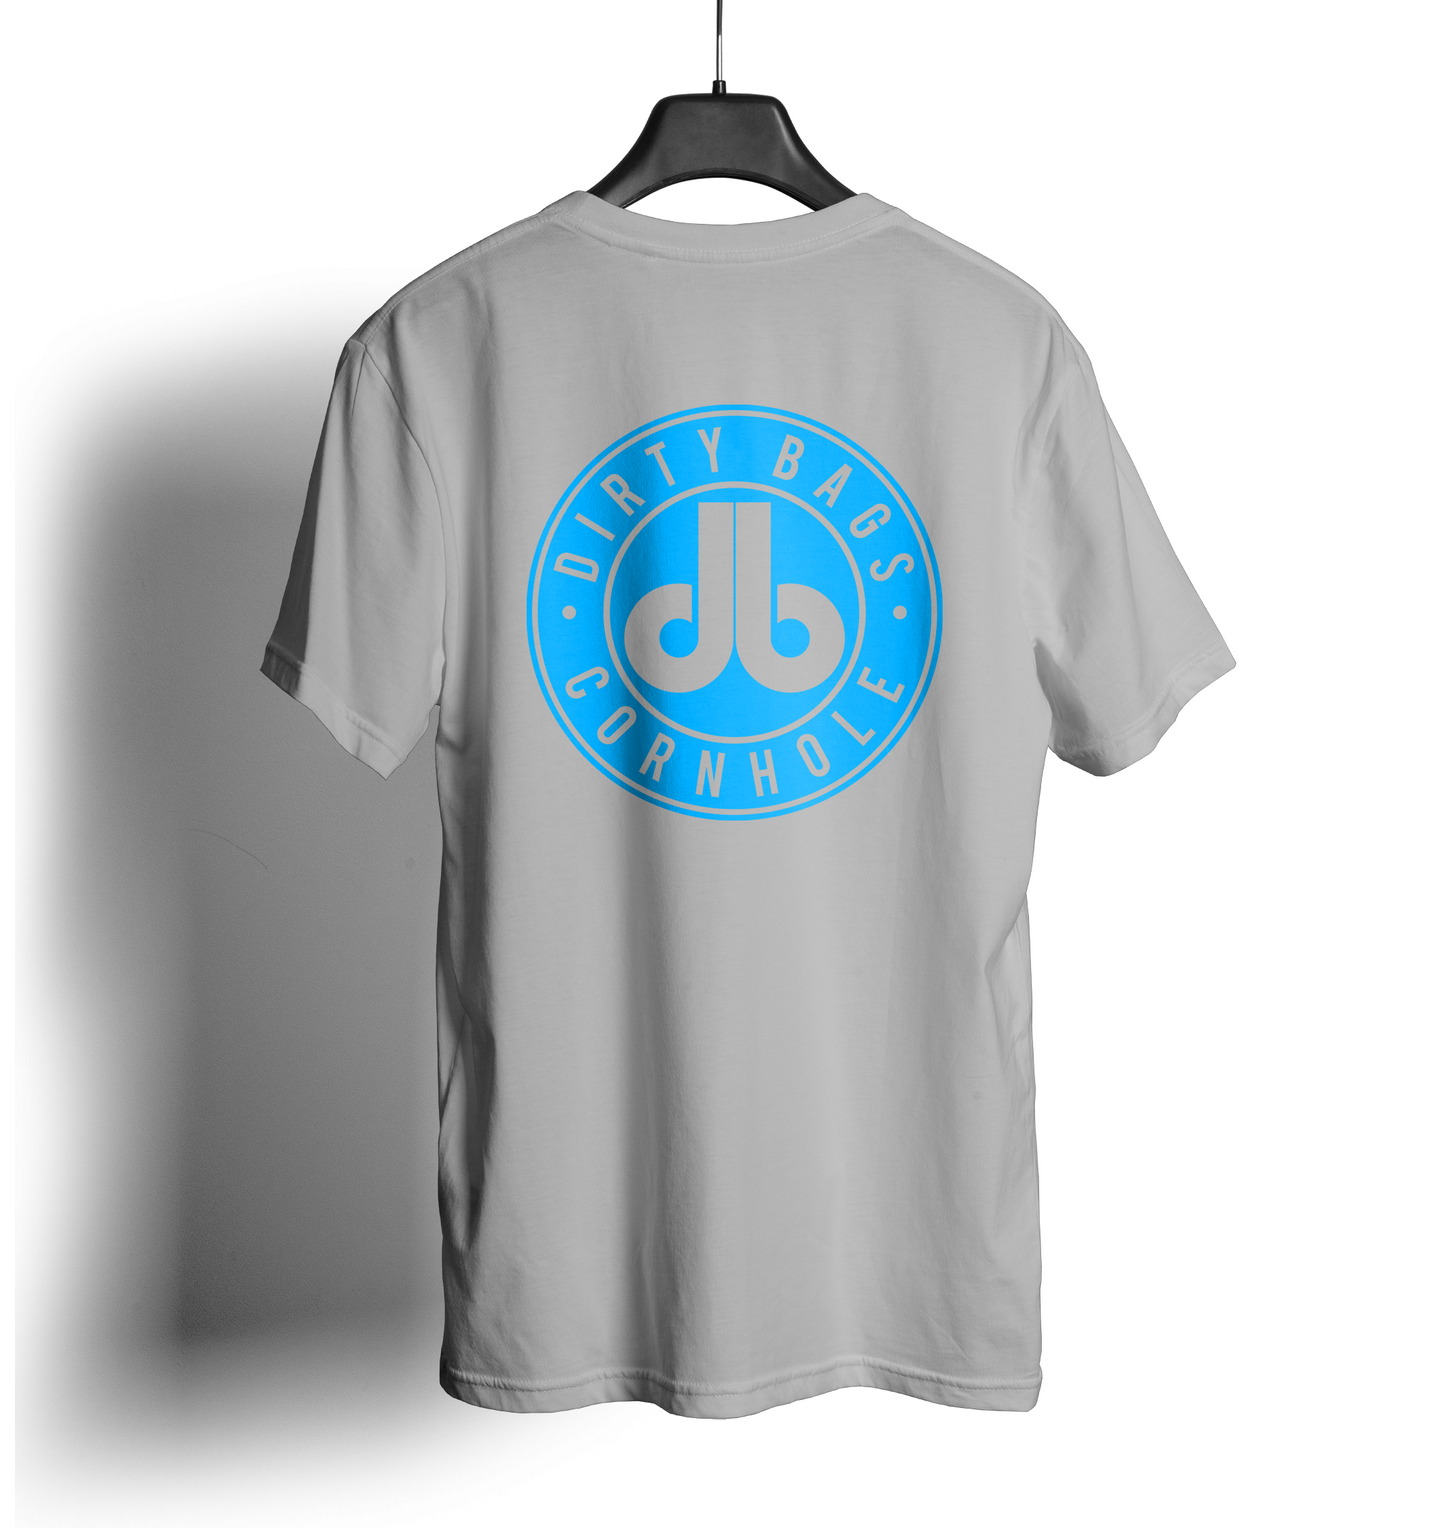 Dirty Bags Cornhole Shirt - Light Blue Logo